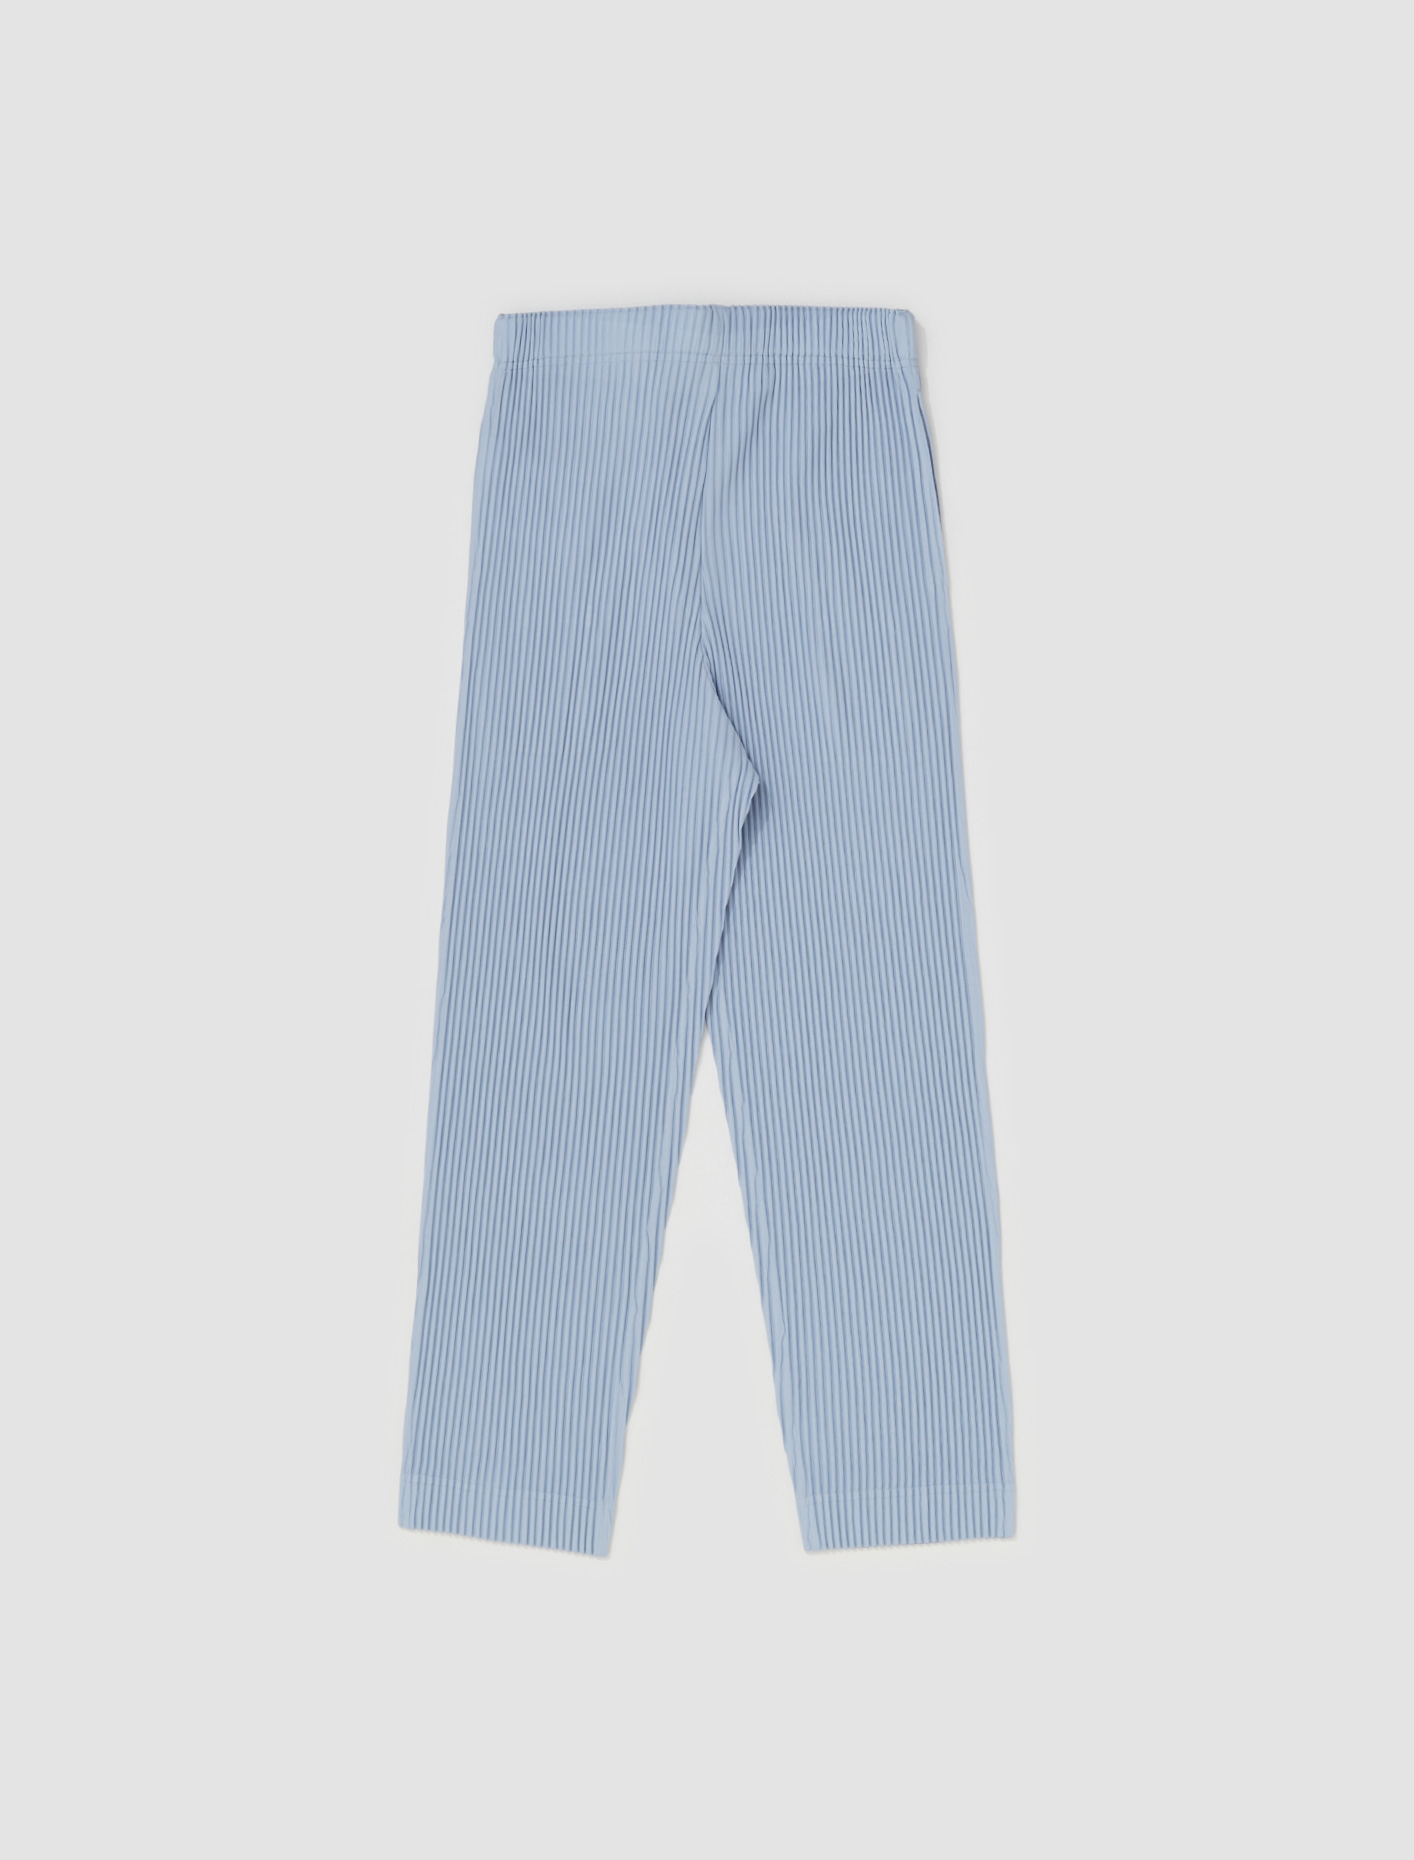 HOMME PLISSE ISSEY MIYAKE Basics Pleated Trousers - Light Gray | Garmentory